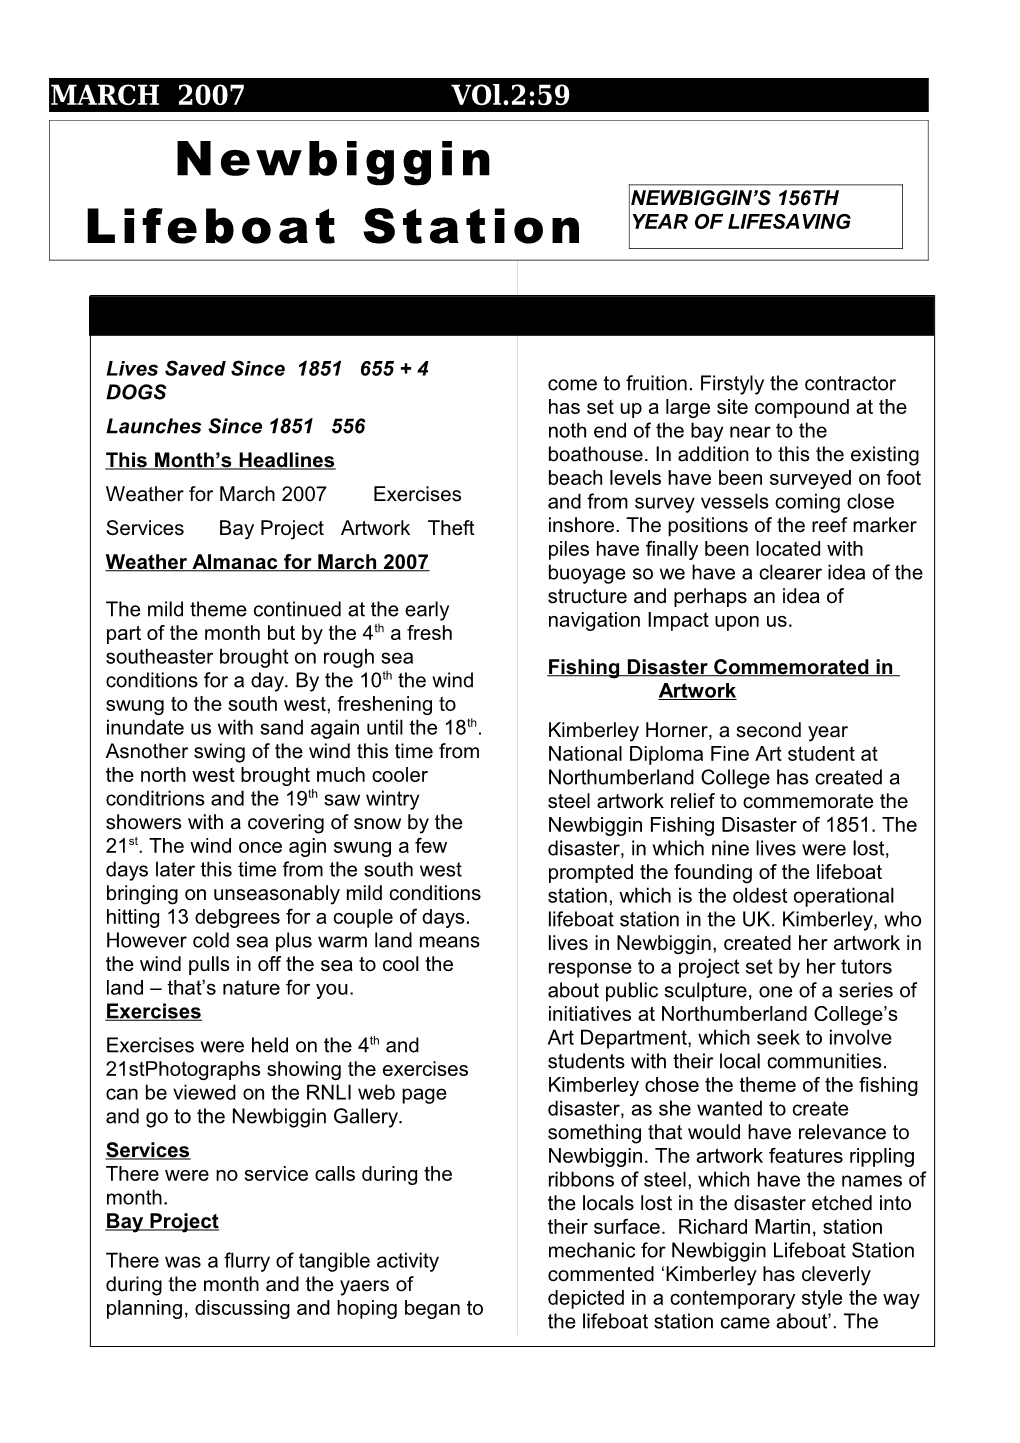 2 Newbiggin Lifeboat Station - 2 s1